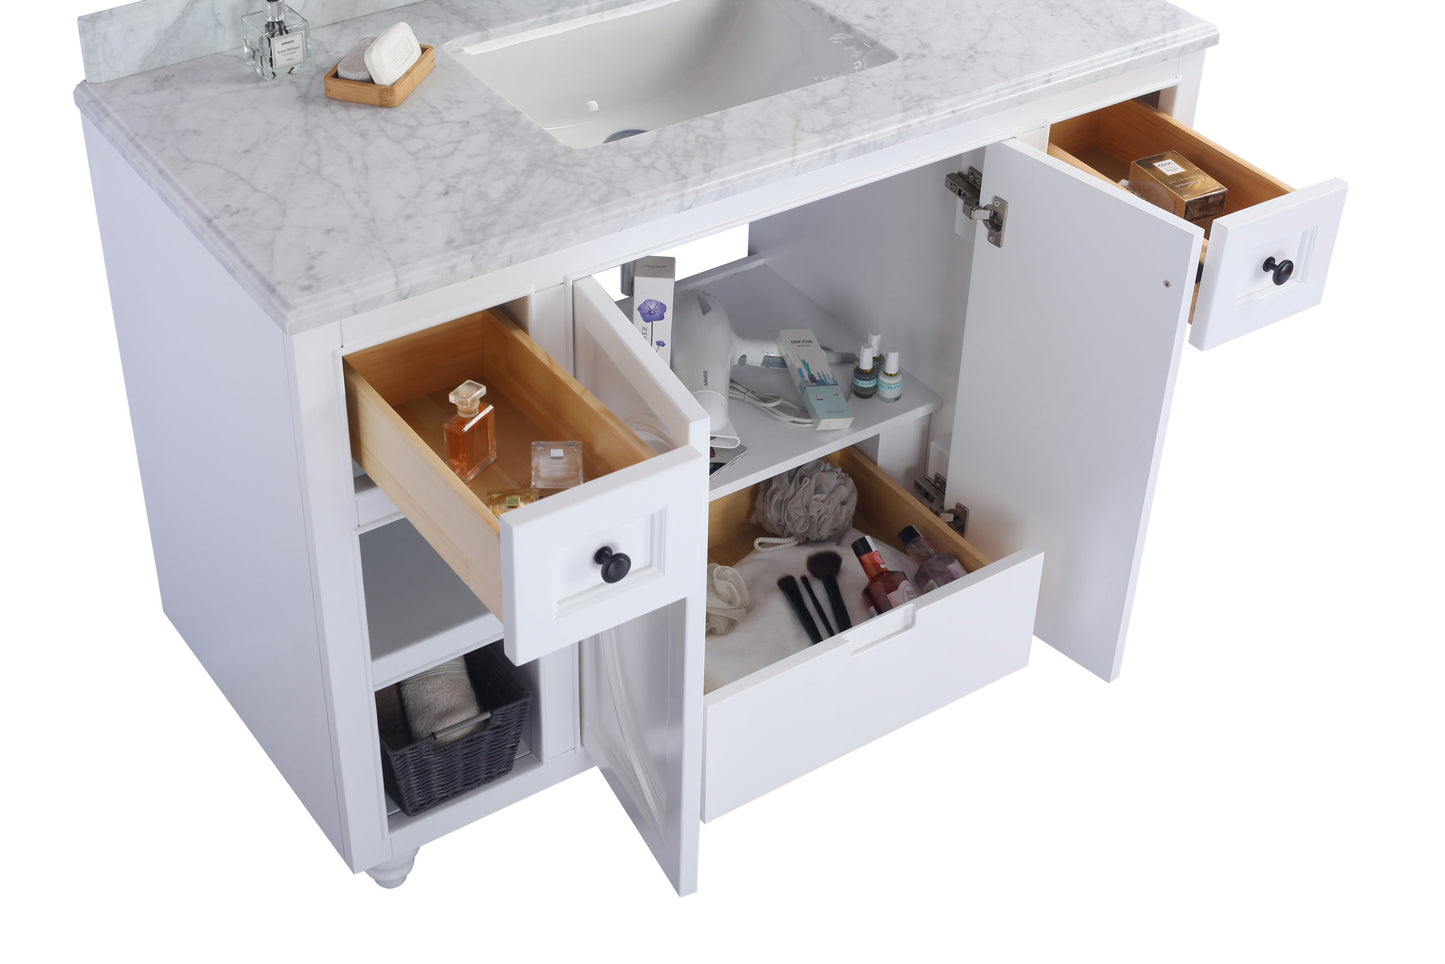 Odyssey 48" White Bathroom Vanity with White Carrara Marble Countertop